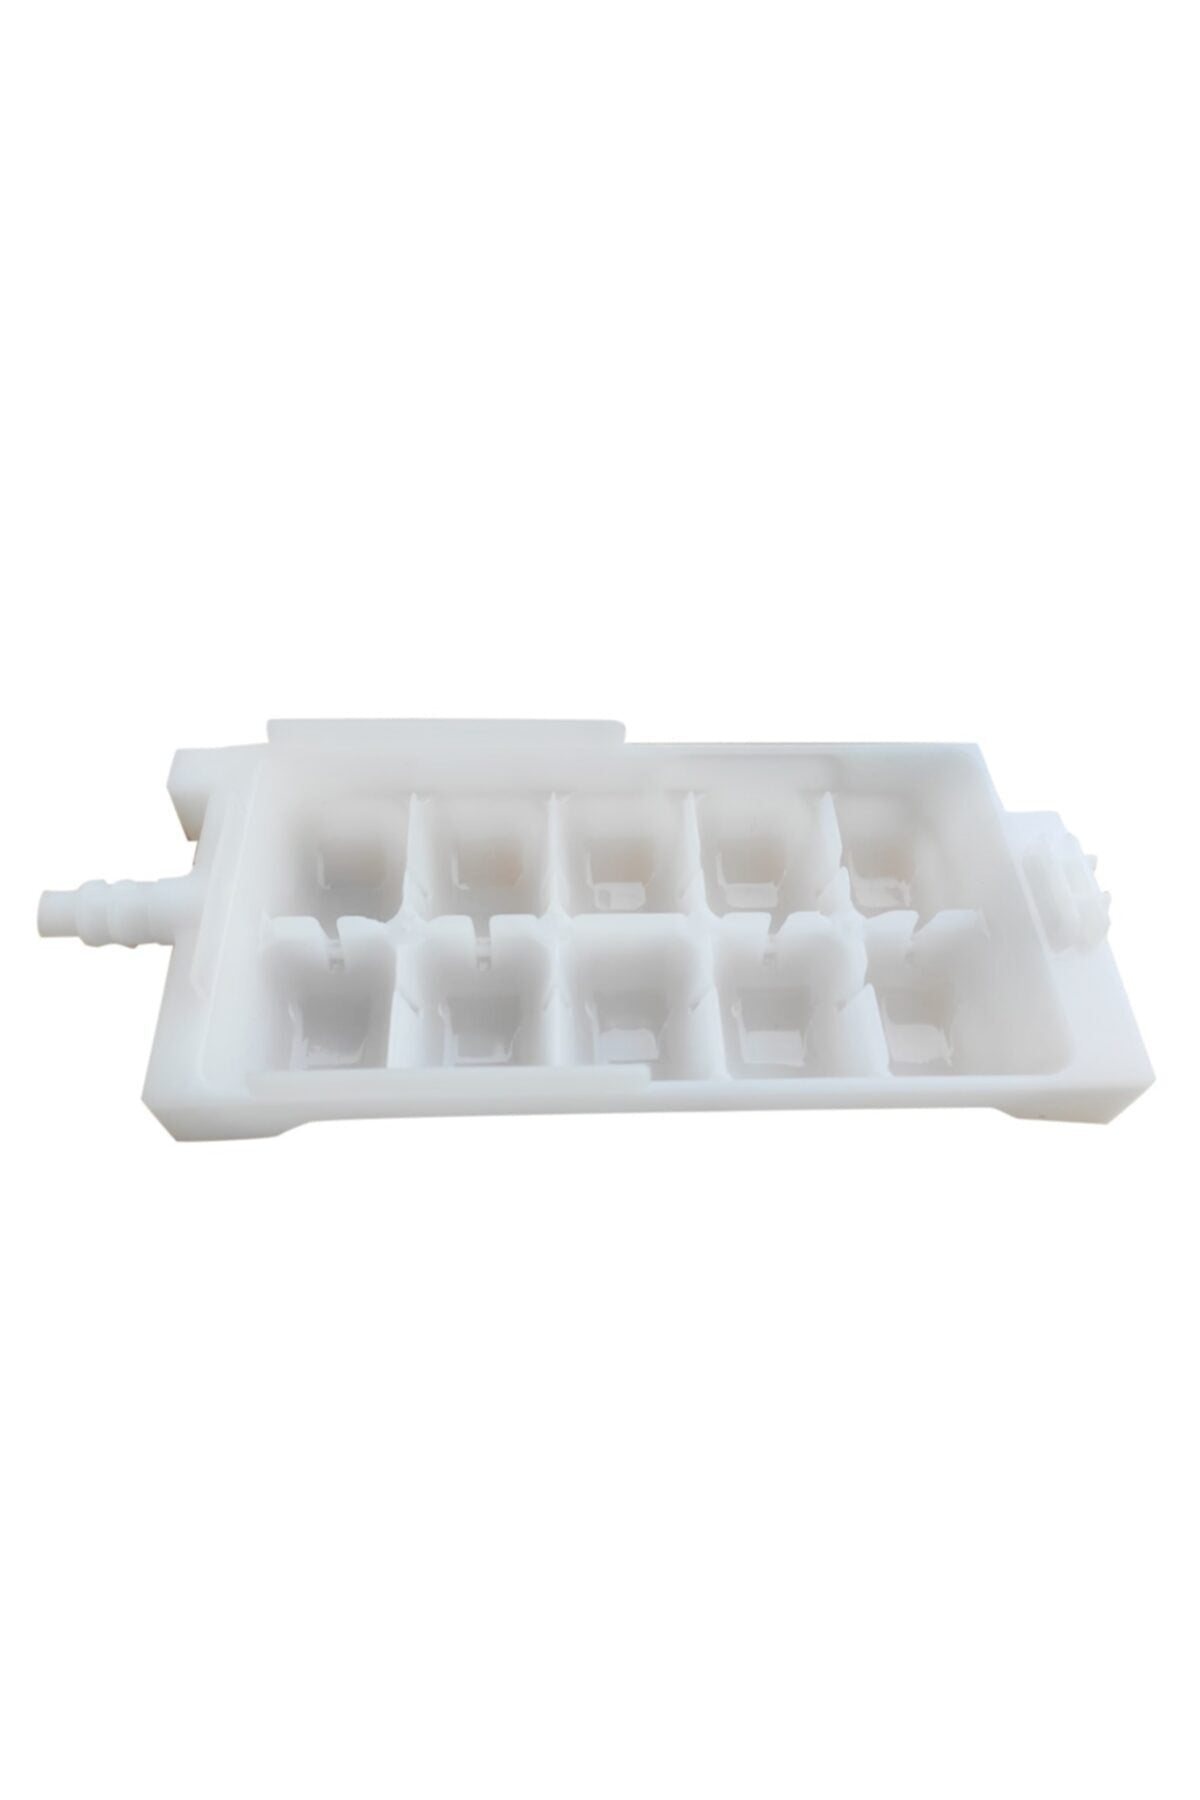 Fridge Freezer Ice Maker Cube Tray For Beko, Arcelik, Blomberg Refrige –  OZBA SPARE PARTS ONLINE STORE